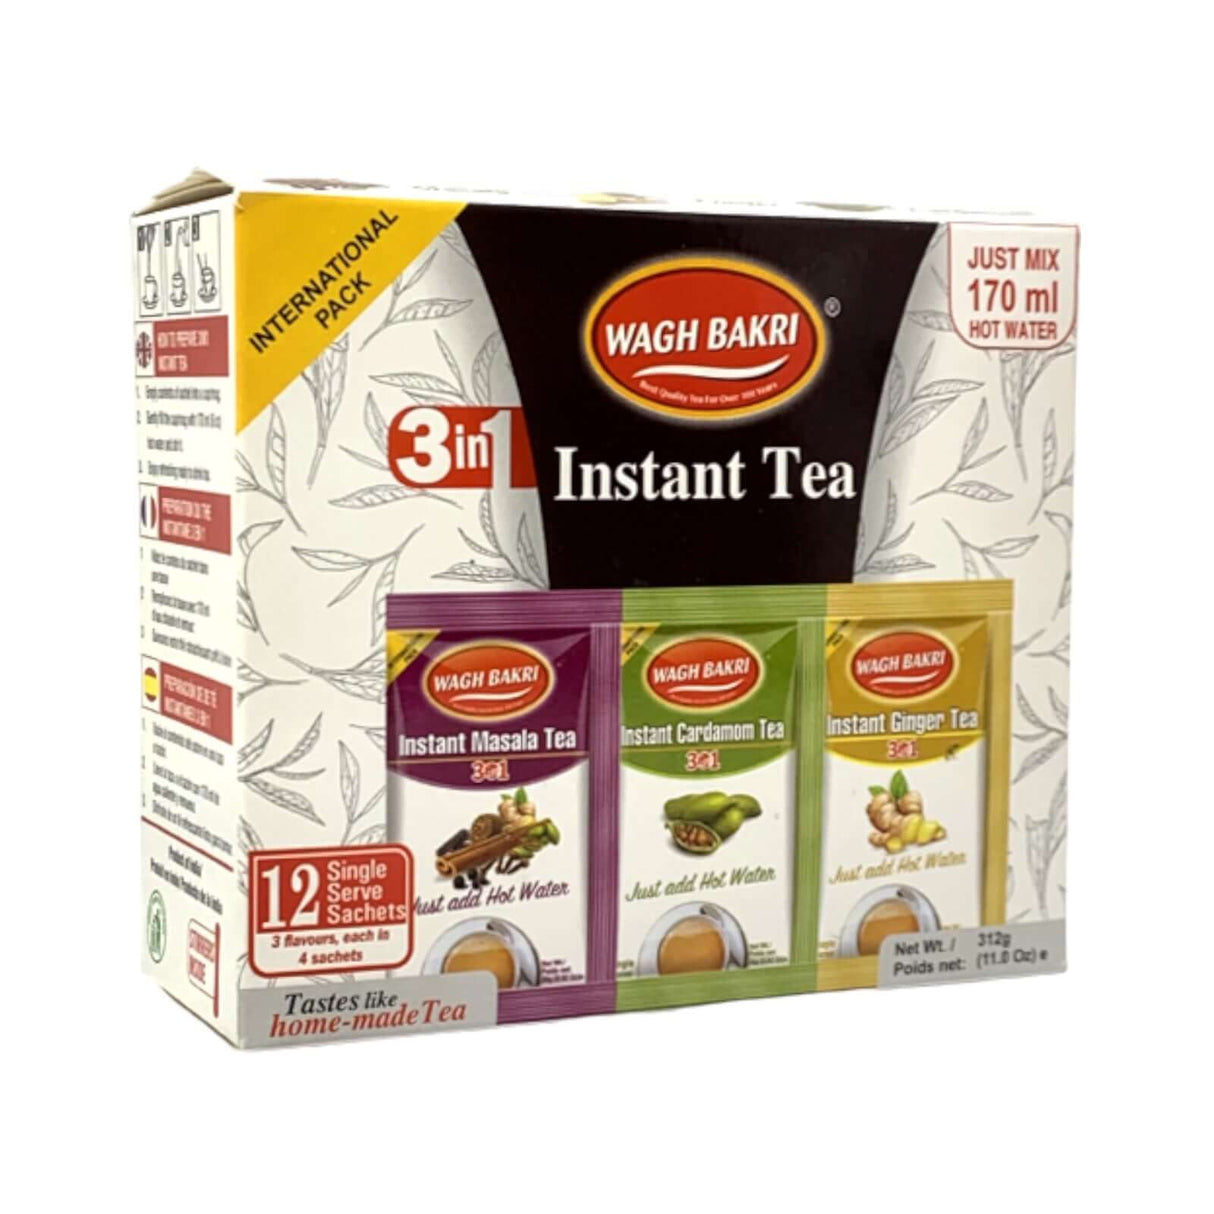 Wagh bakri Instant Tea 3 in 1